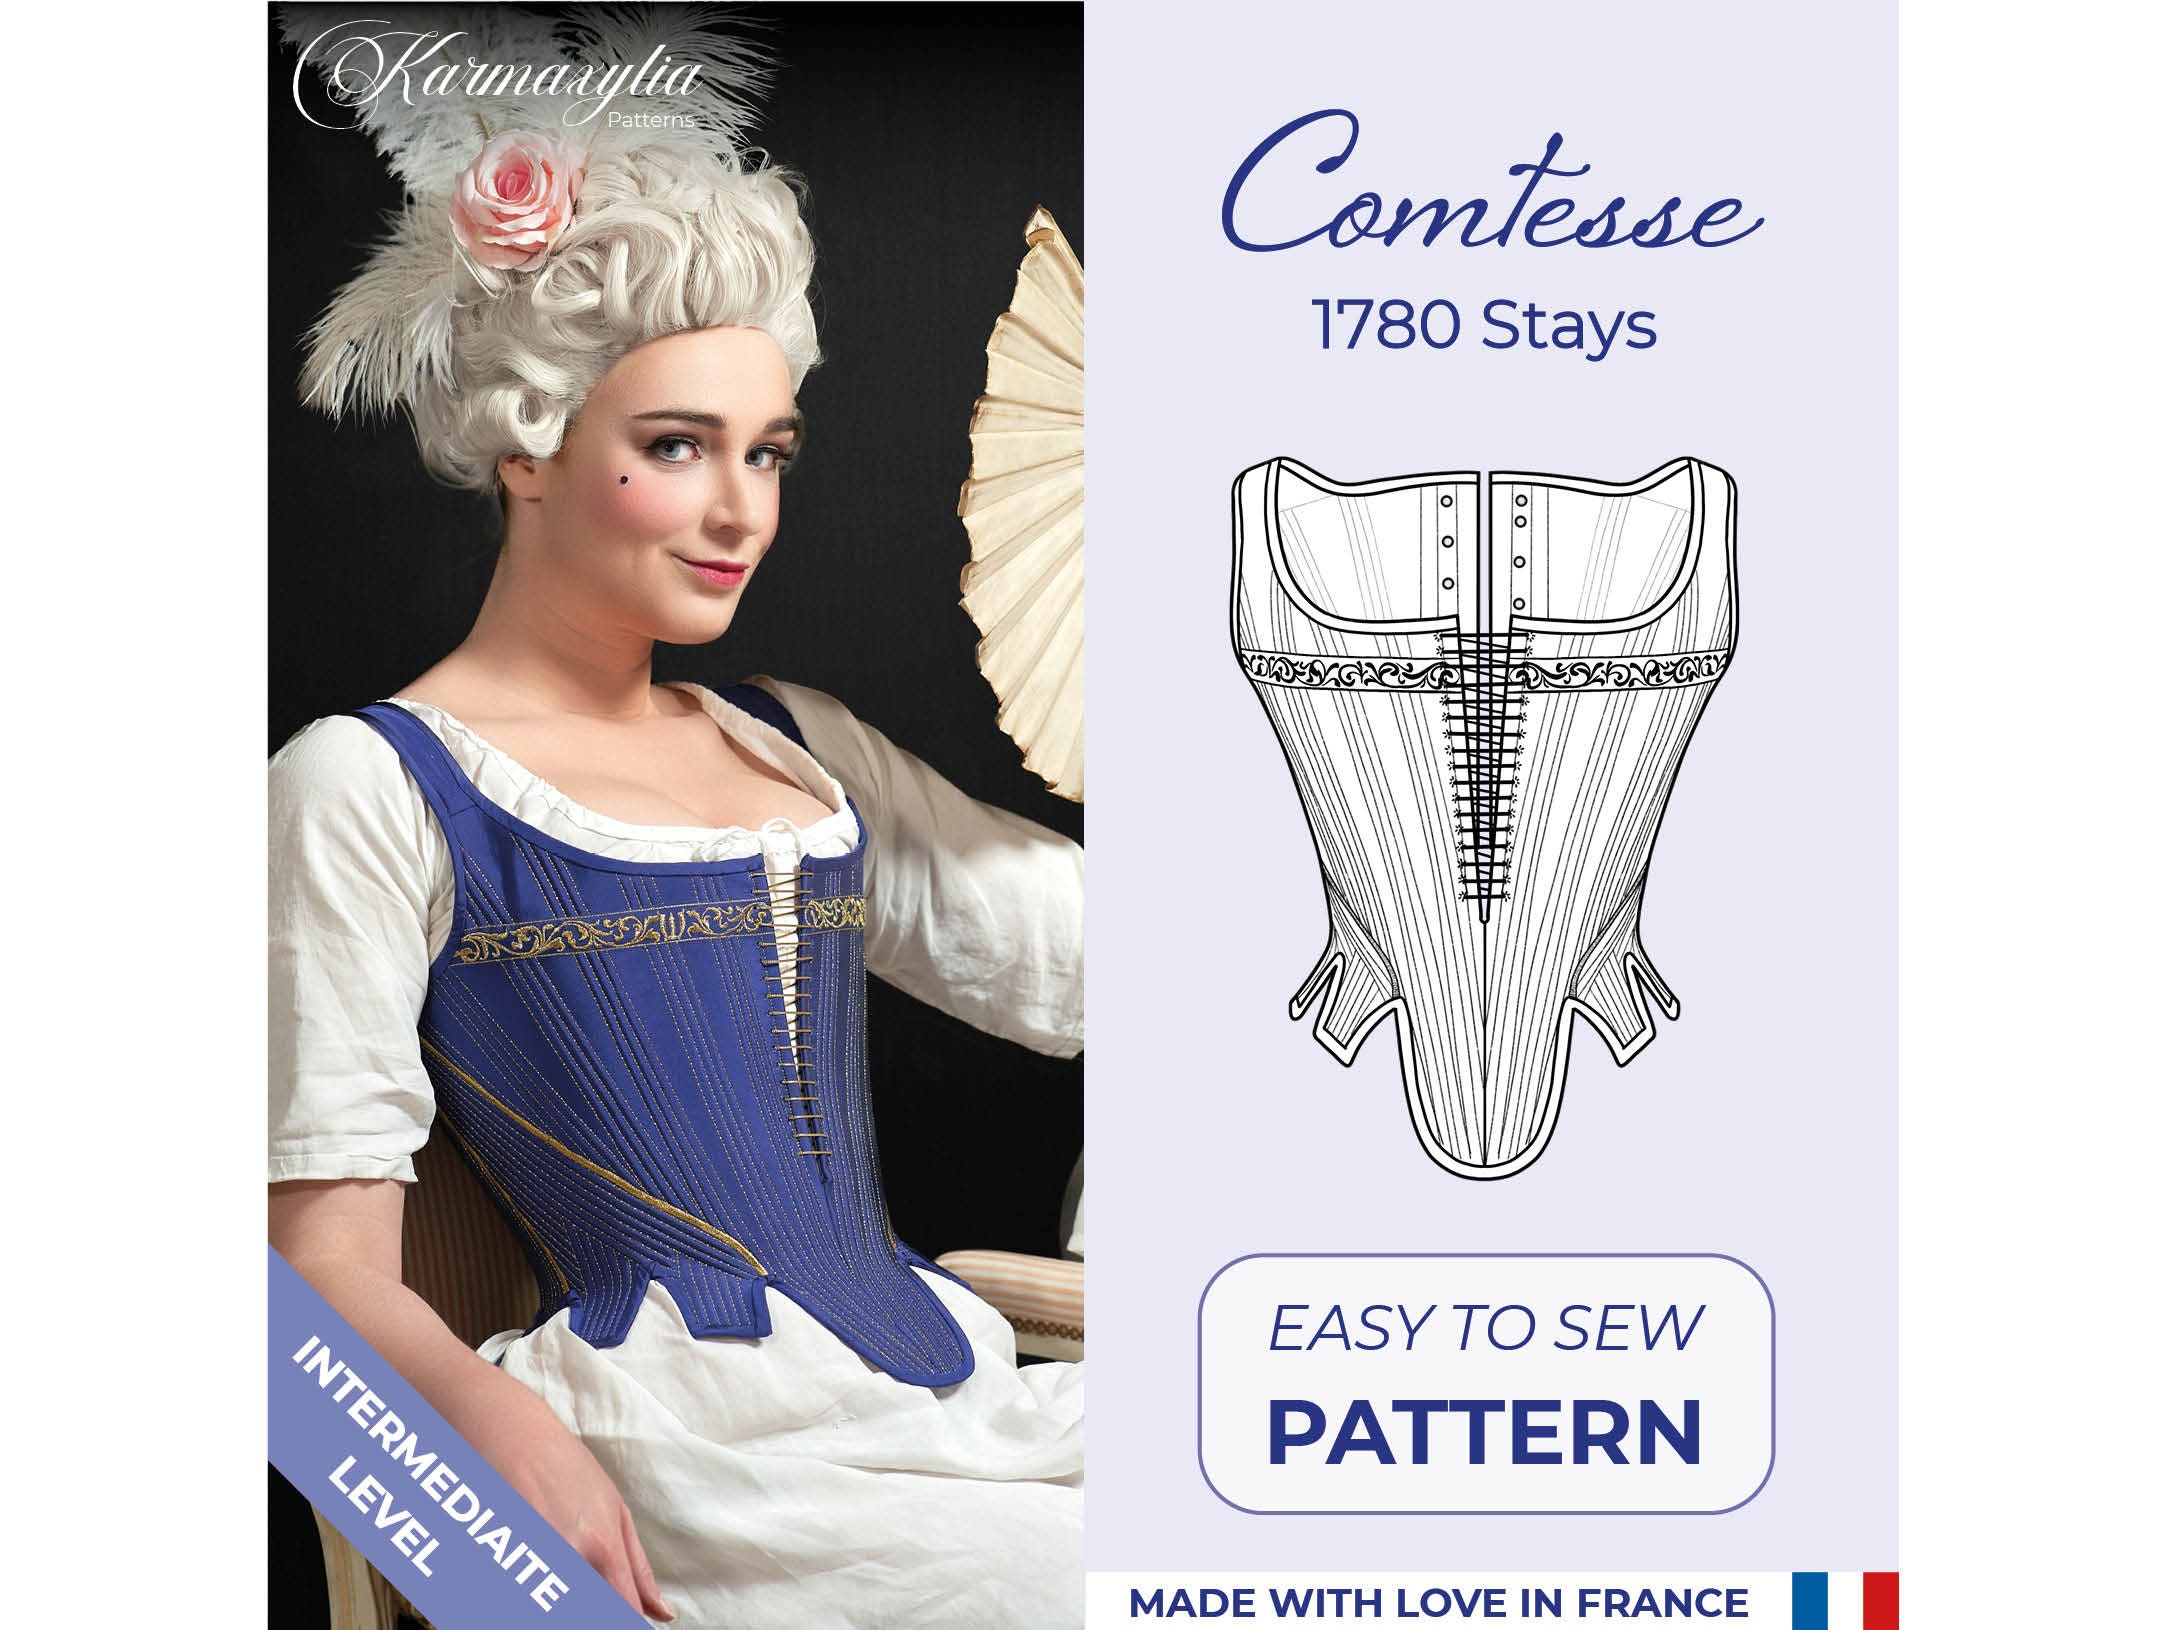 Fixed Size 1910s Edwardian Corset Pattern A La Sirene A4 format, antique  corset pattern